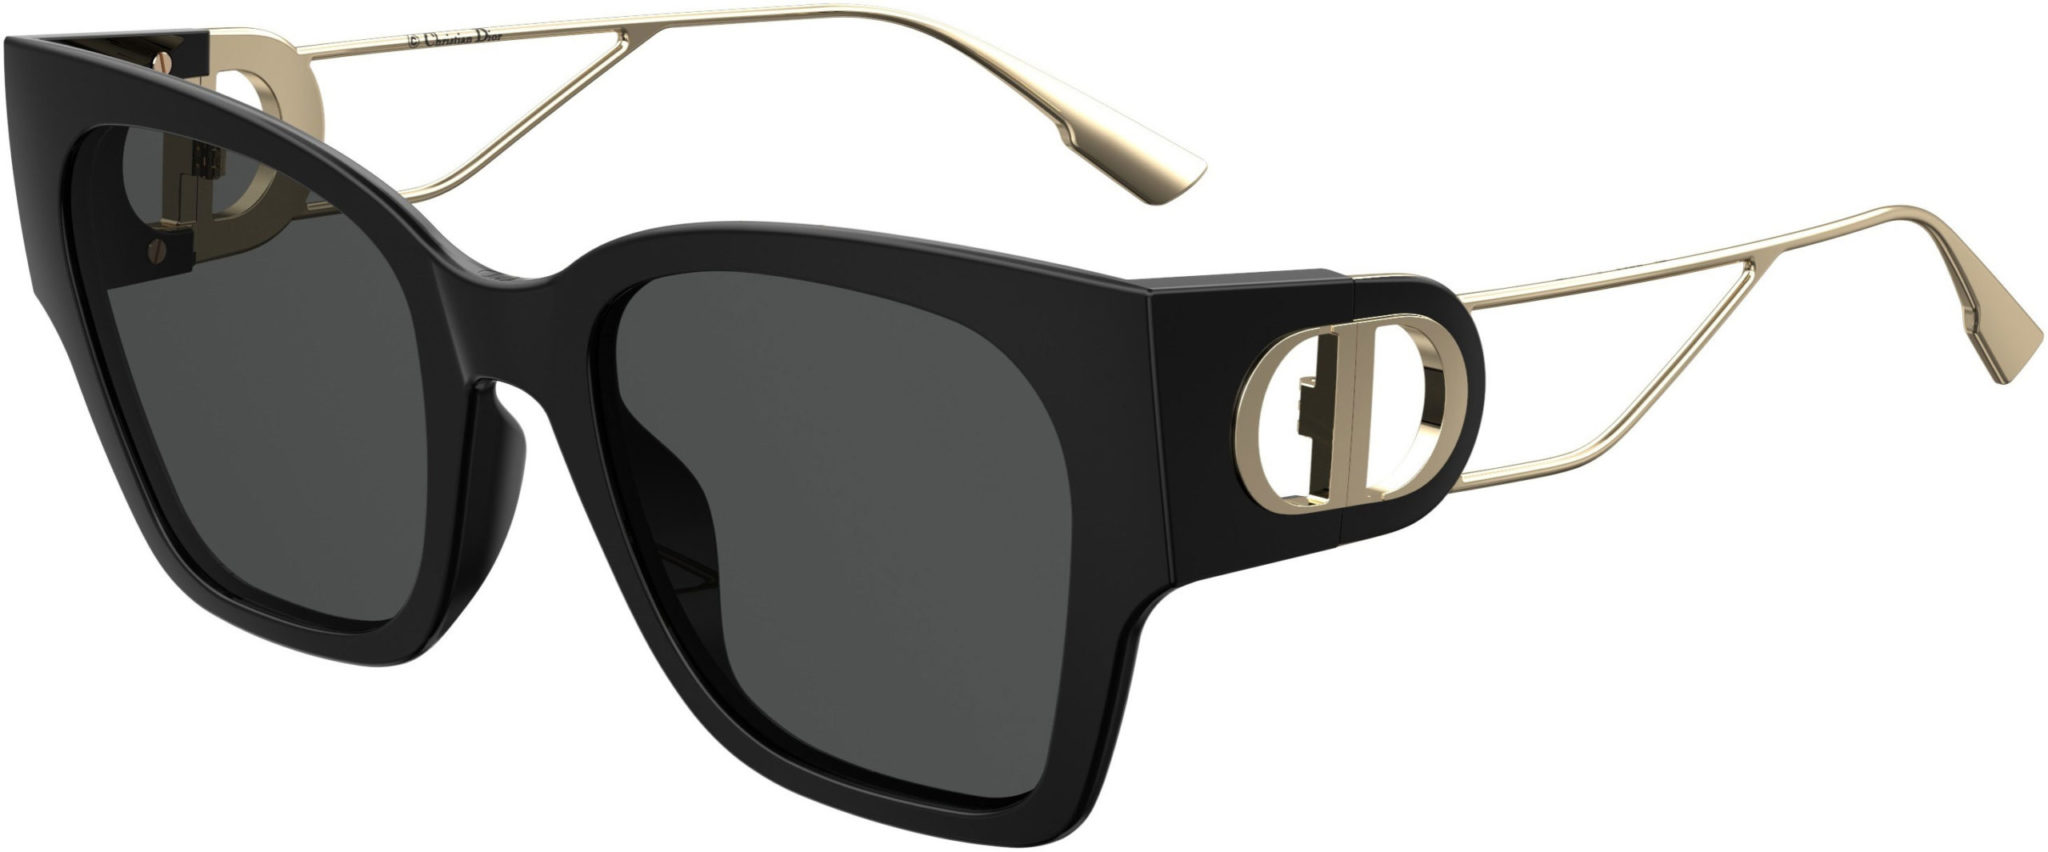 Black Square Sunglasses 